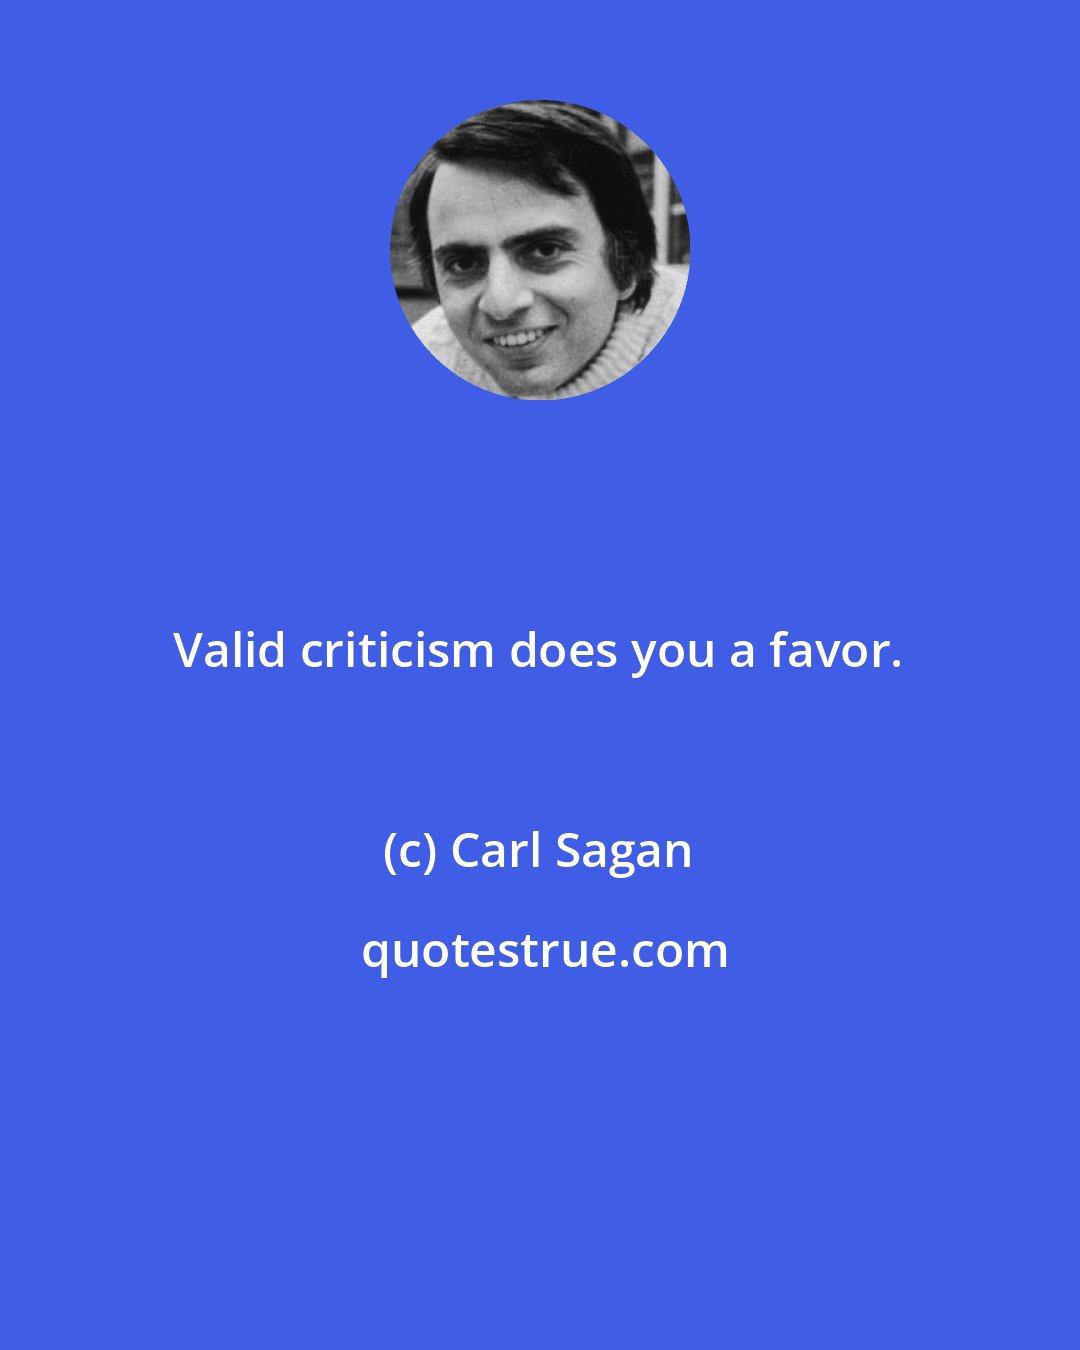 Carl Sagan: Valid criticism does you a favor.